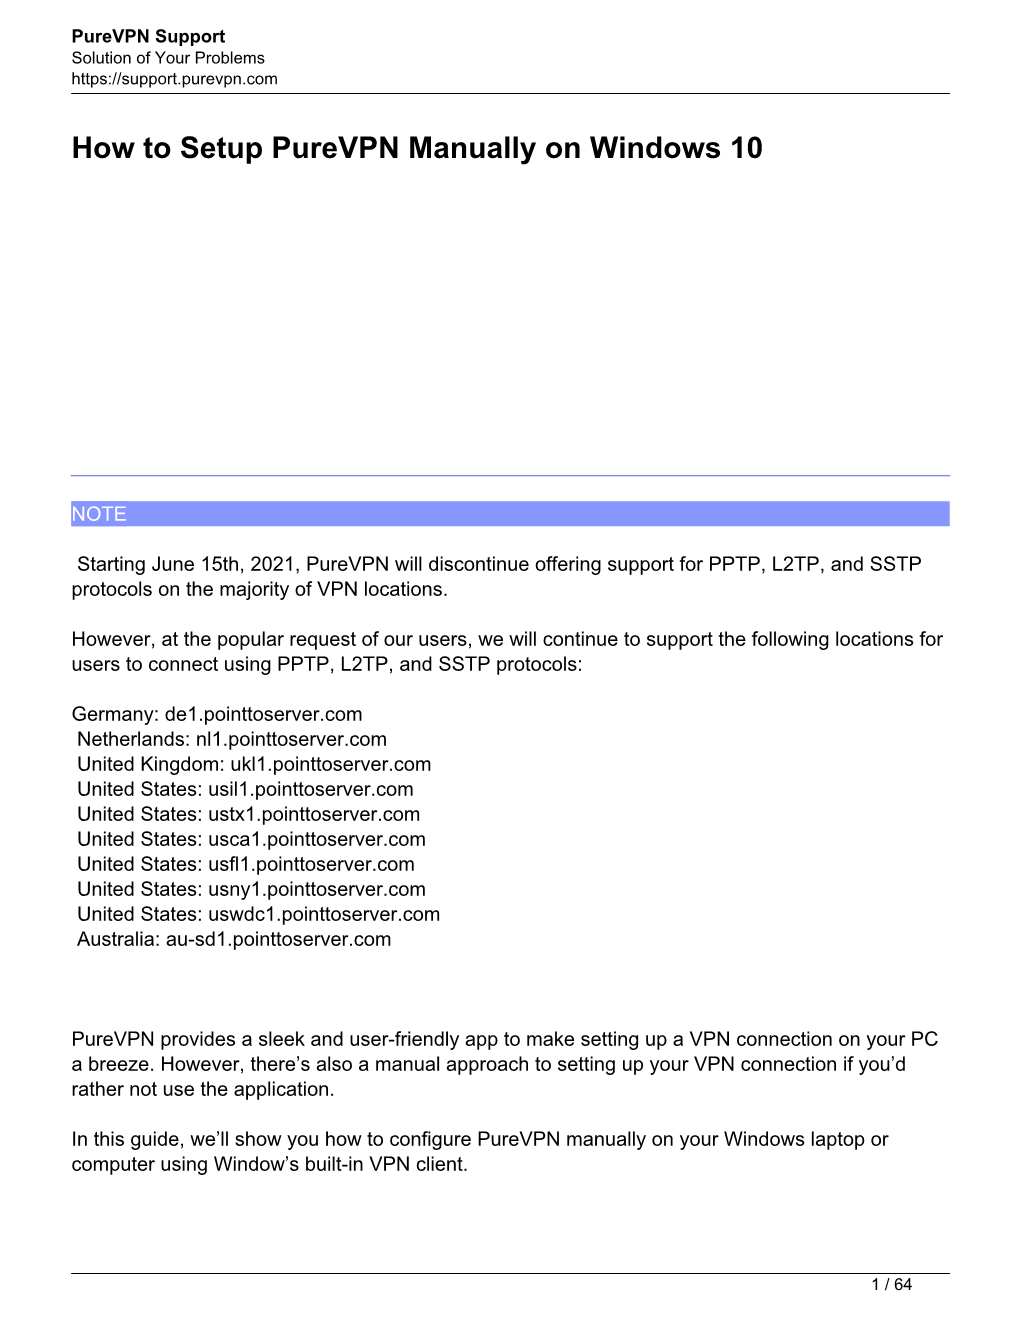 How to Setup Purevpn Manually on Windows 10